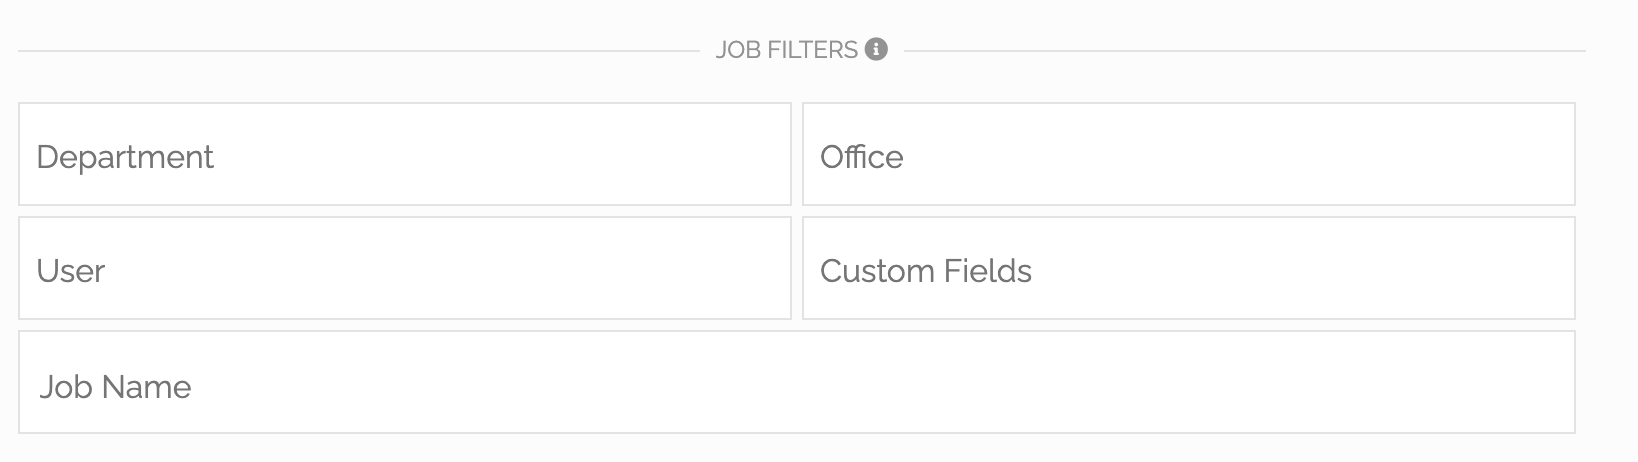 job_filters.png